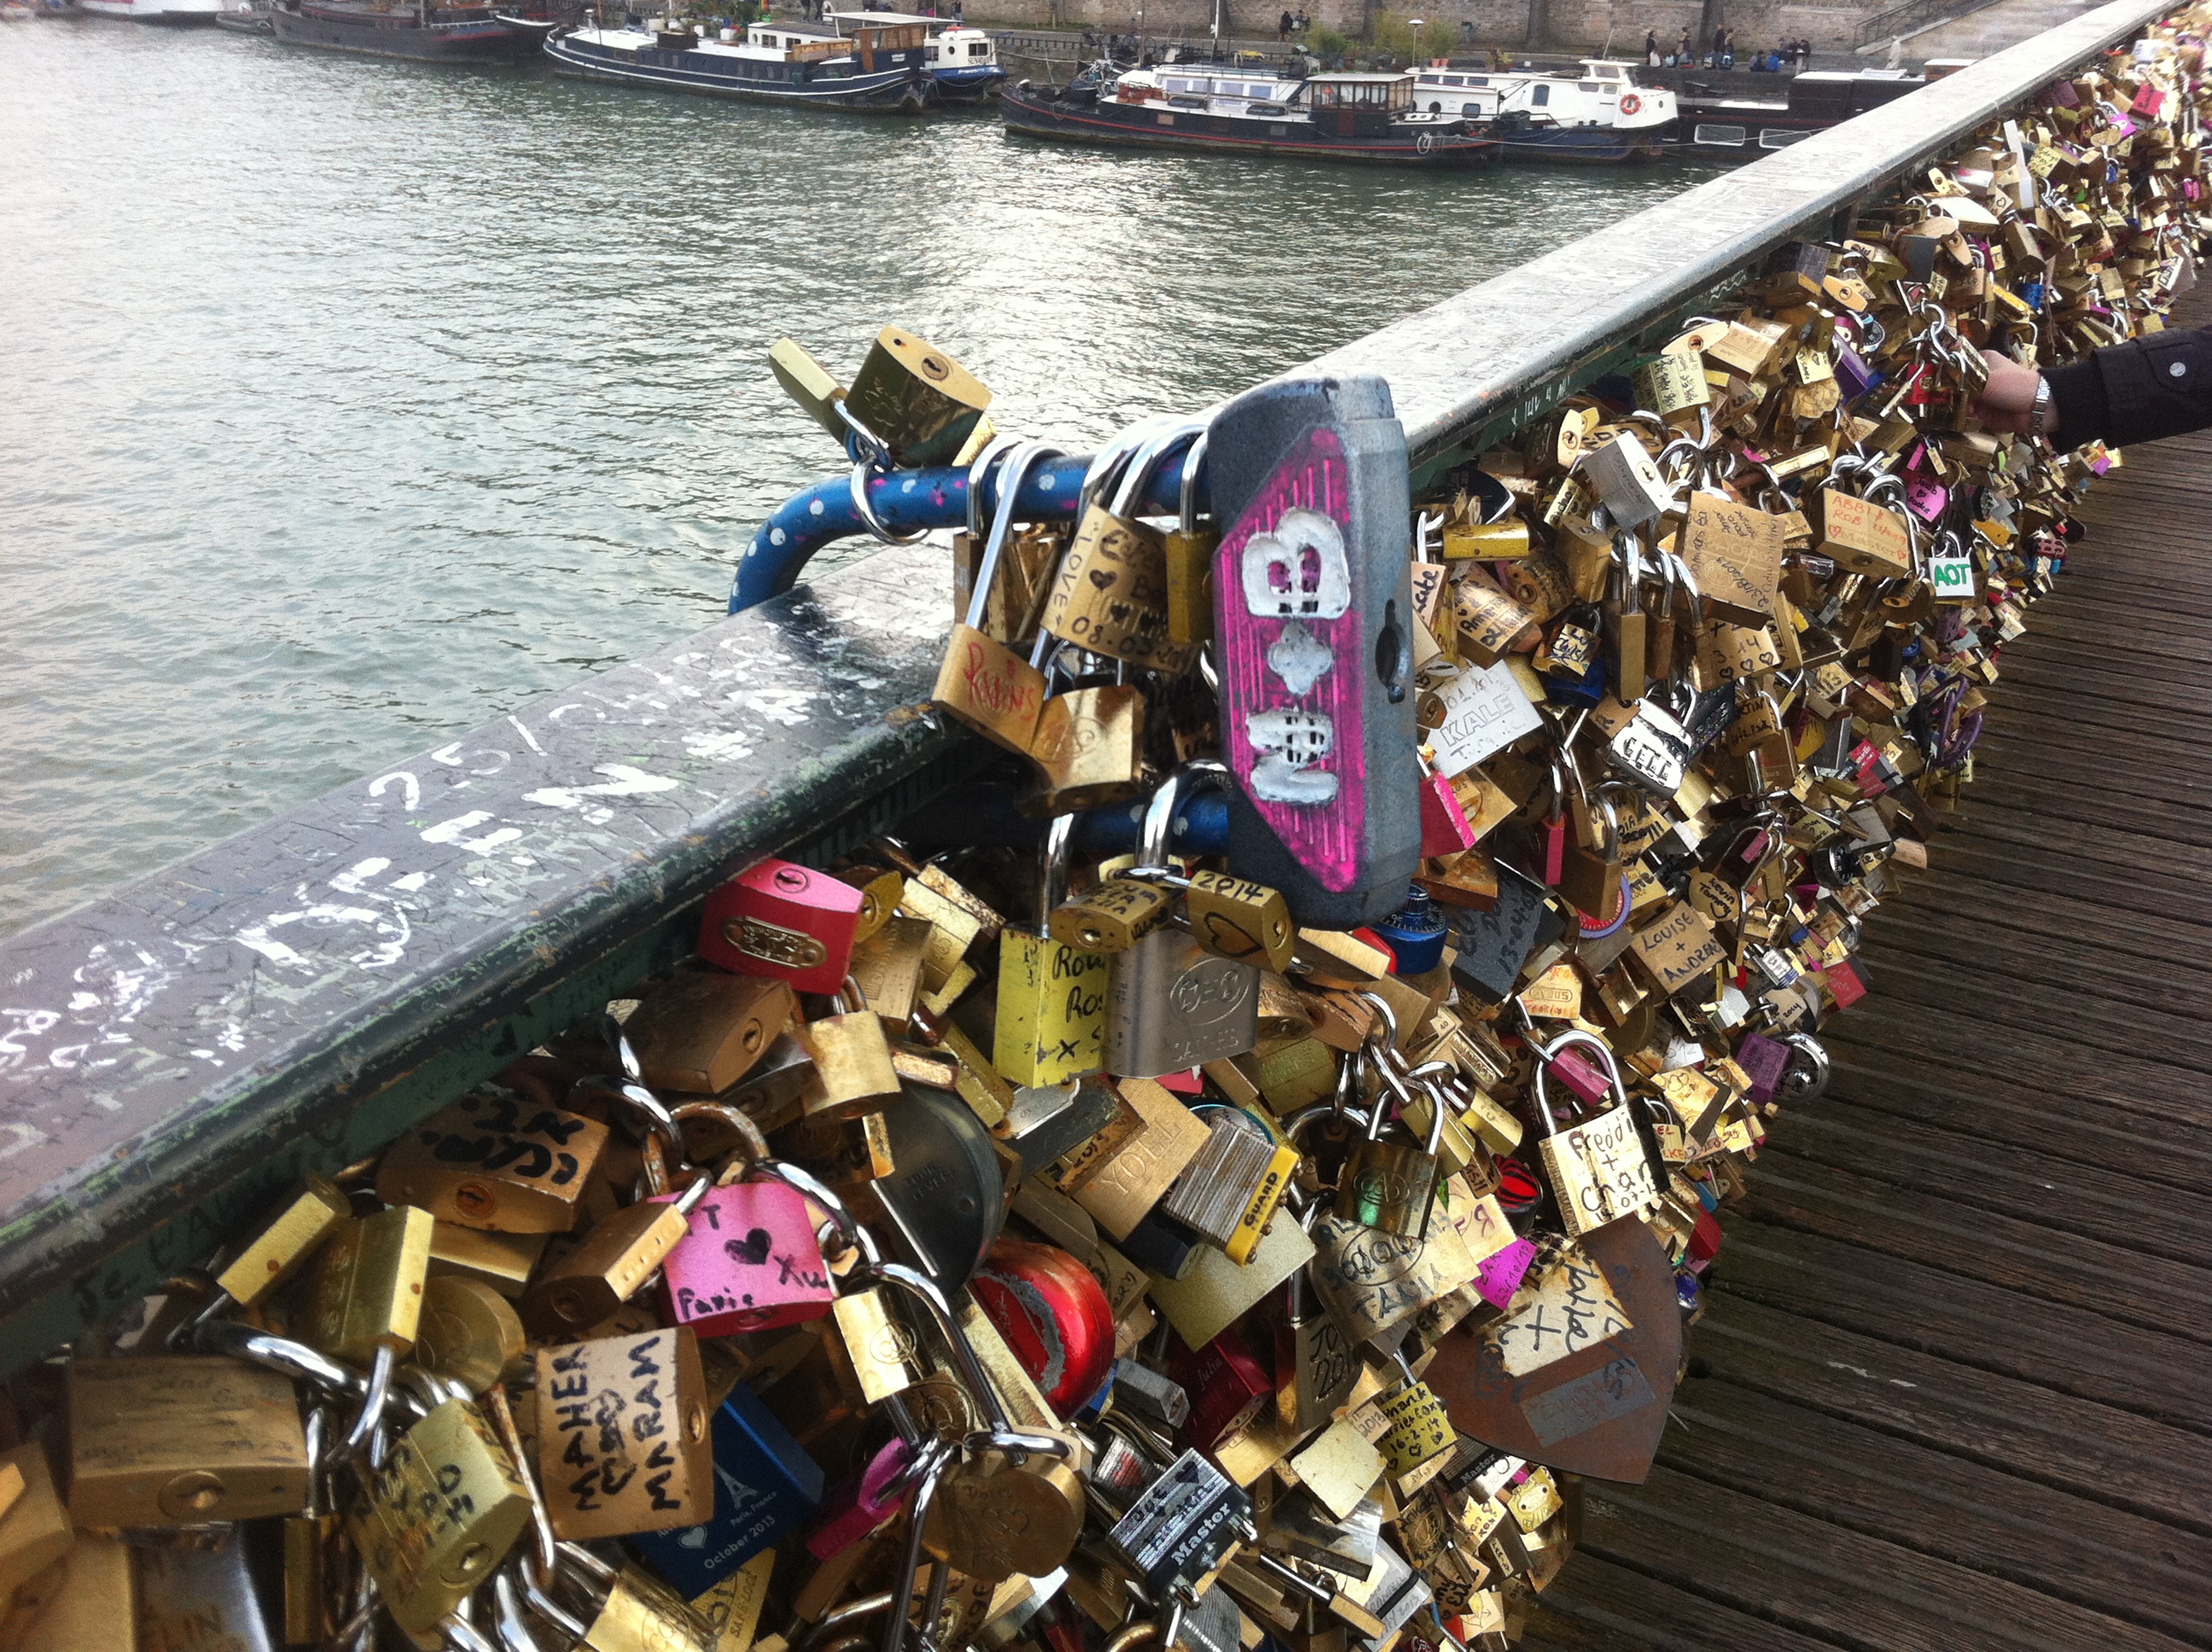 Parisians seek split from love locks | CNN Travel